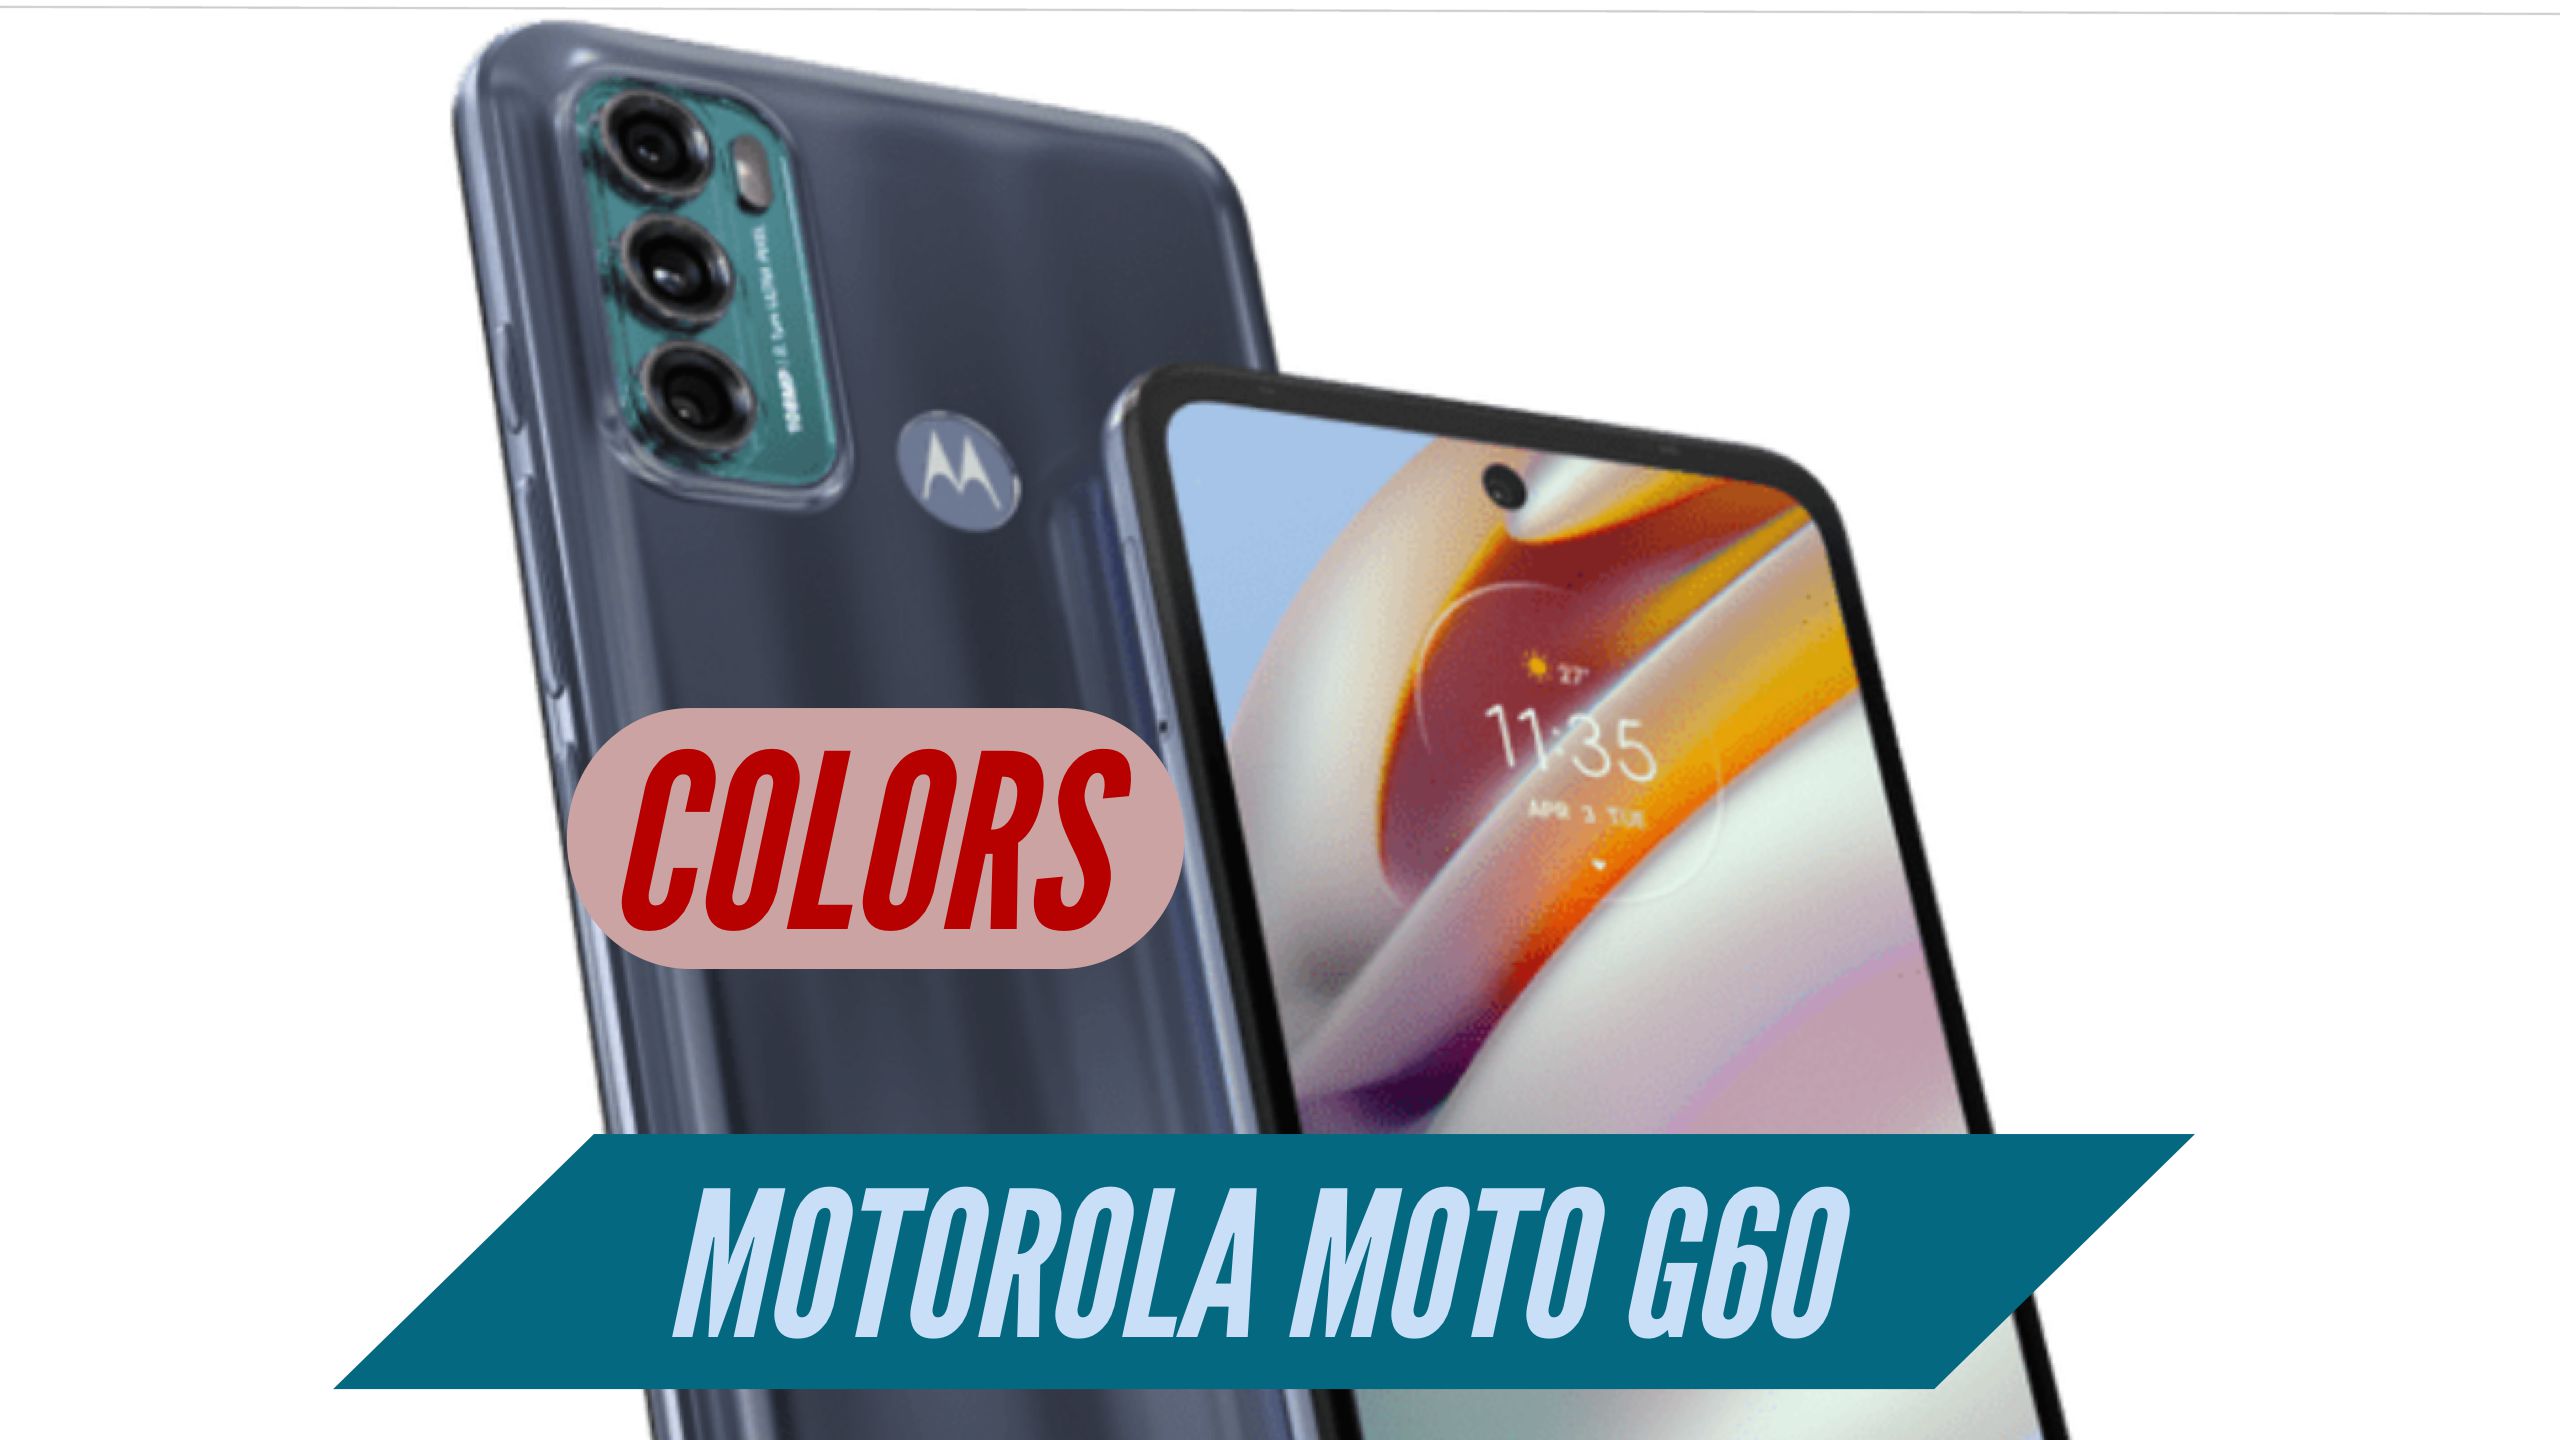 Motorola Moto G60 Colors